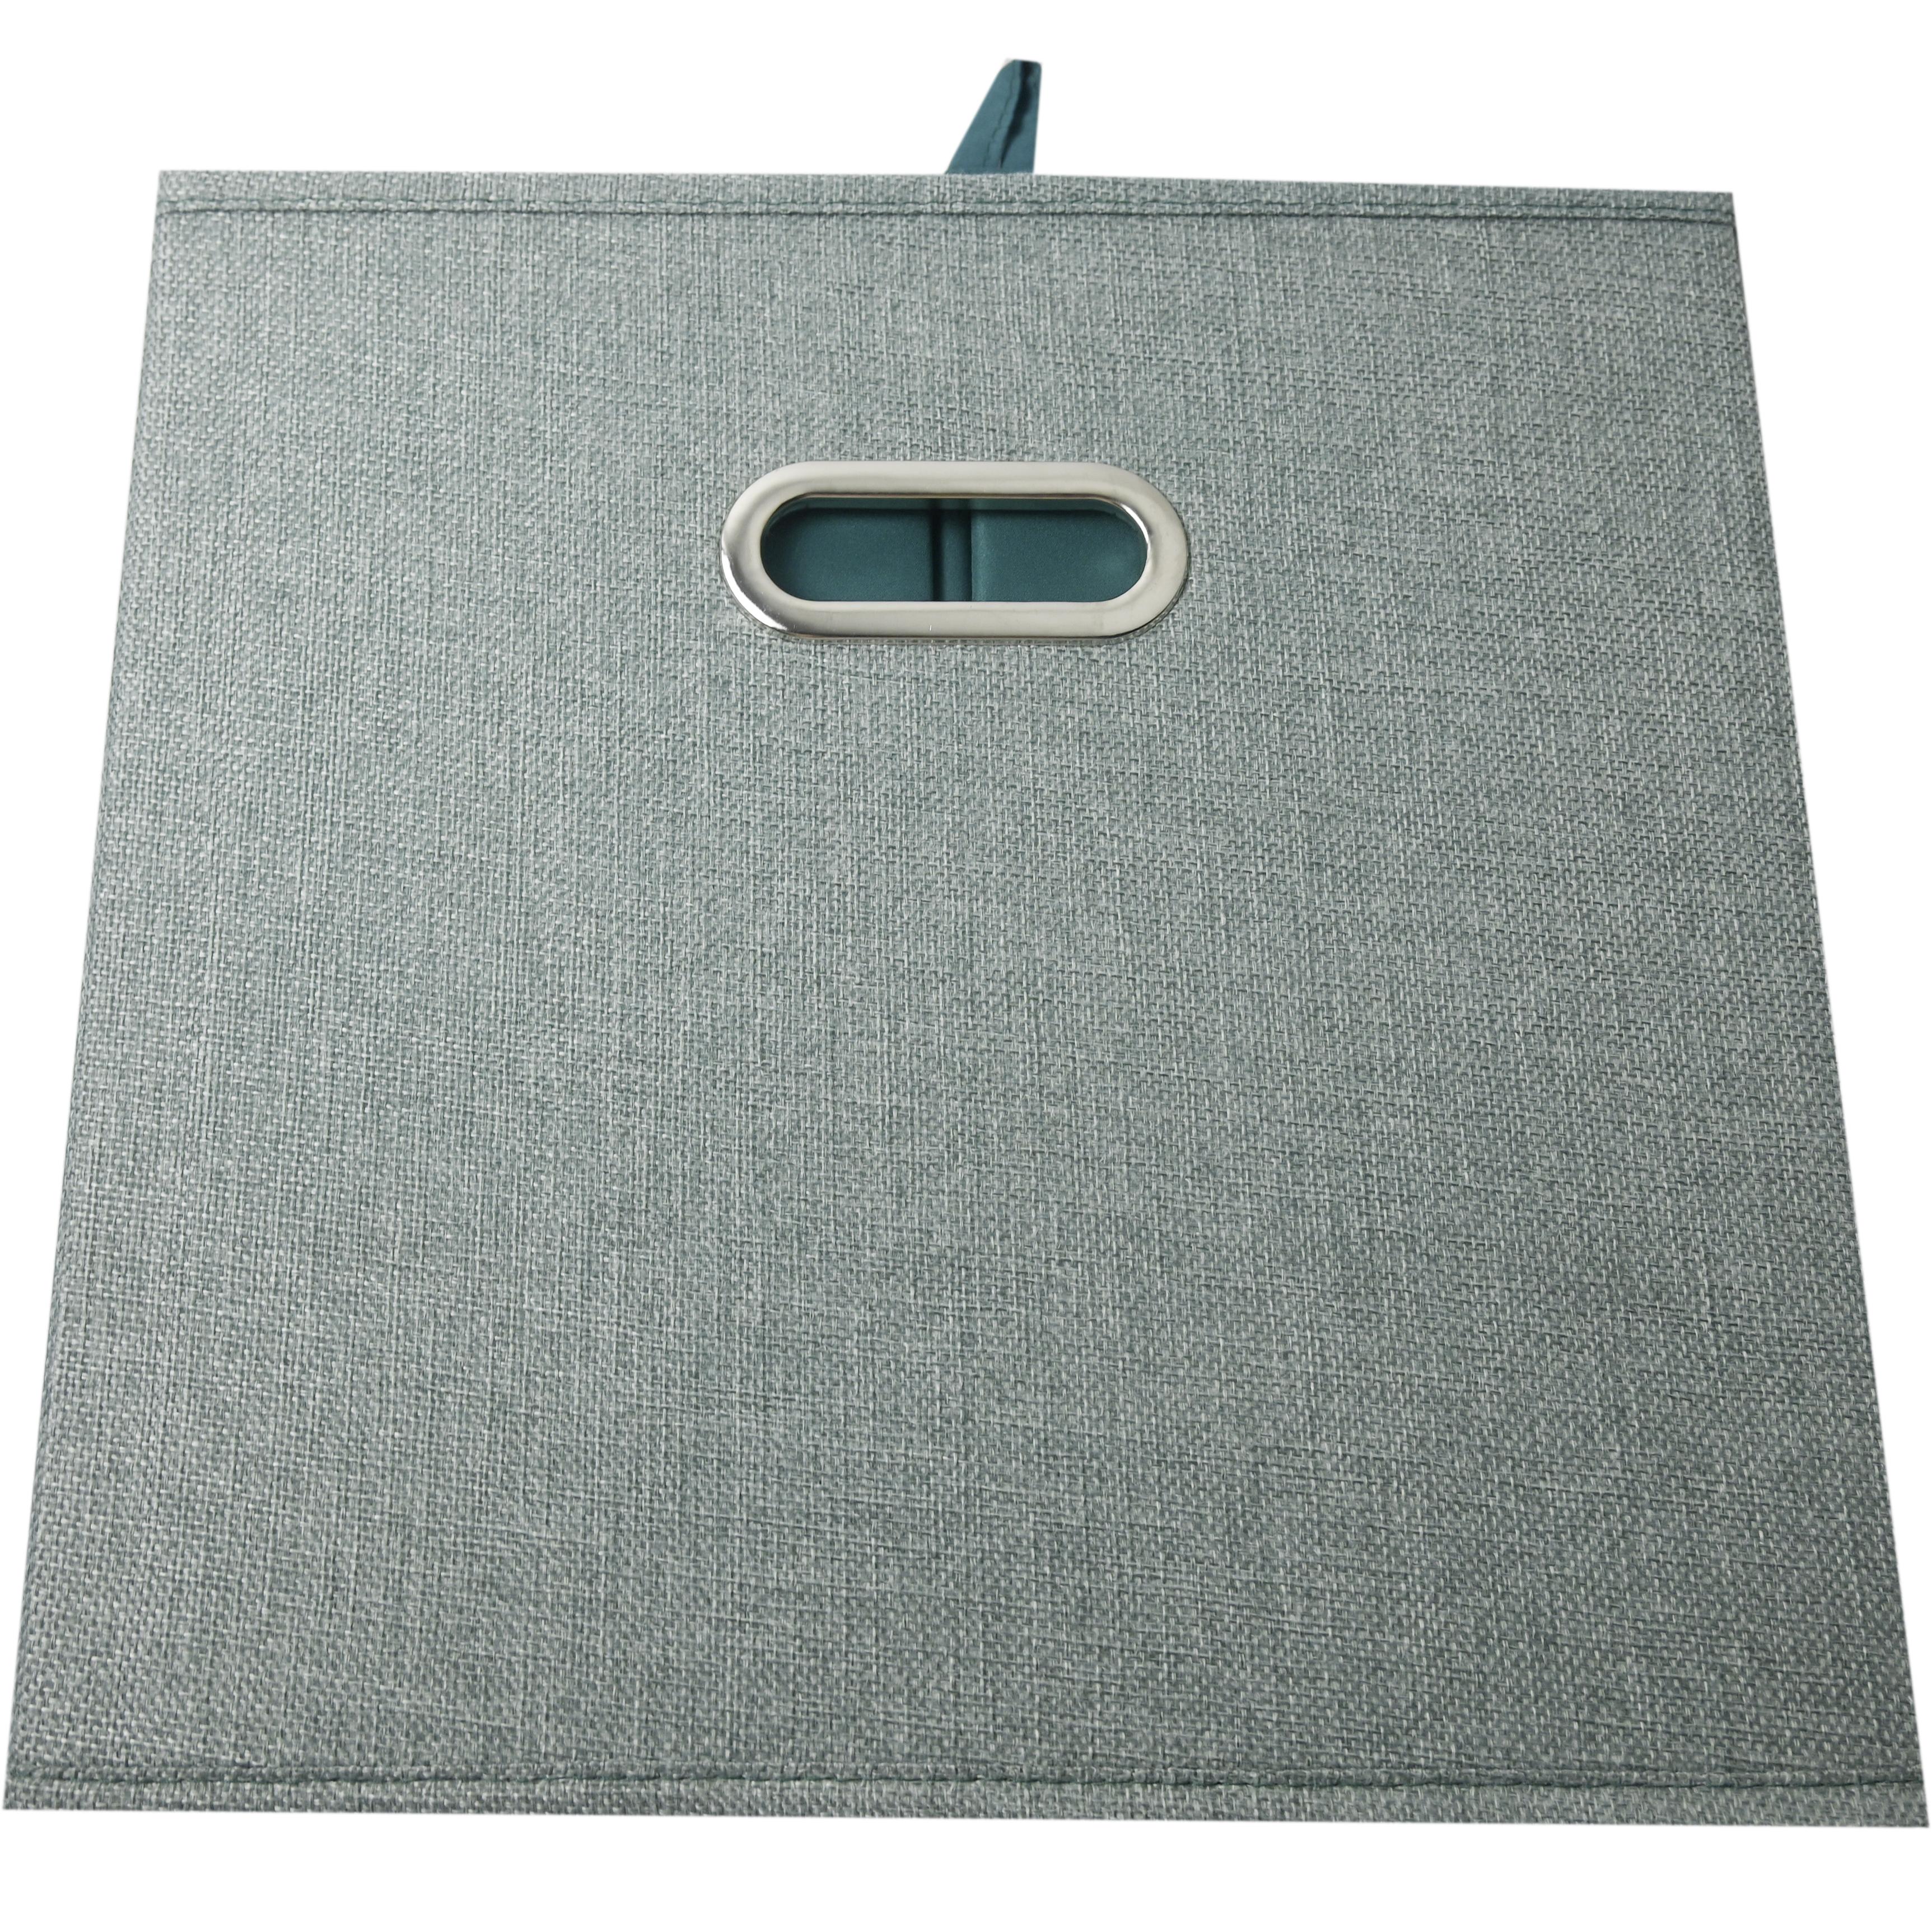 Faltbox Bobby ca. 34l - Grün, MODERN, Karton/Textil (33/32/33cm) - Premium Living